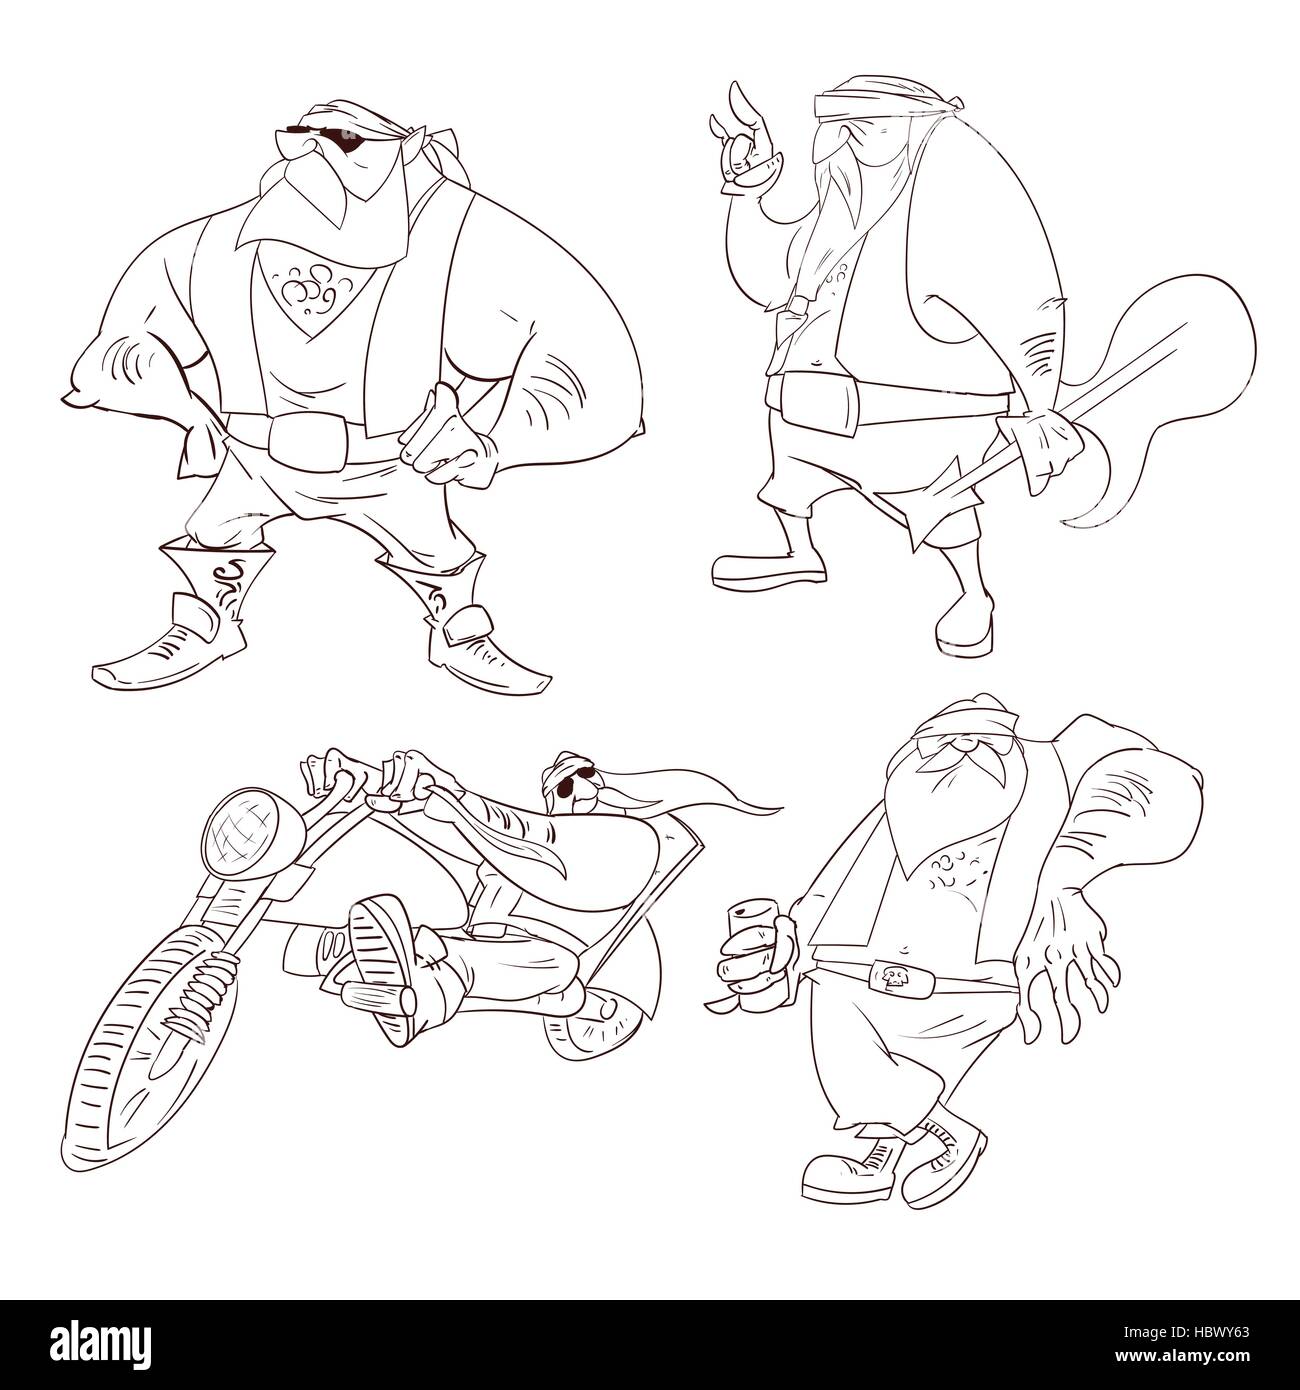 Line drawings vector illustration of a cartoon rocker, biker or gang member Stock Vector